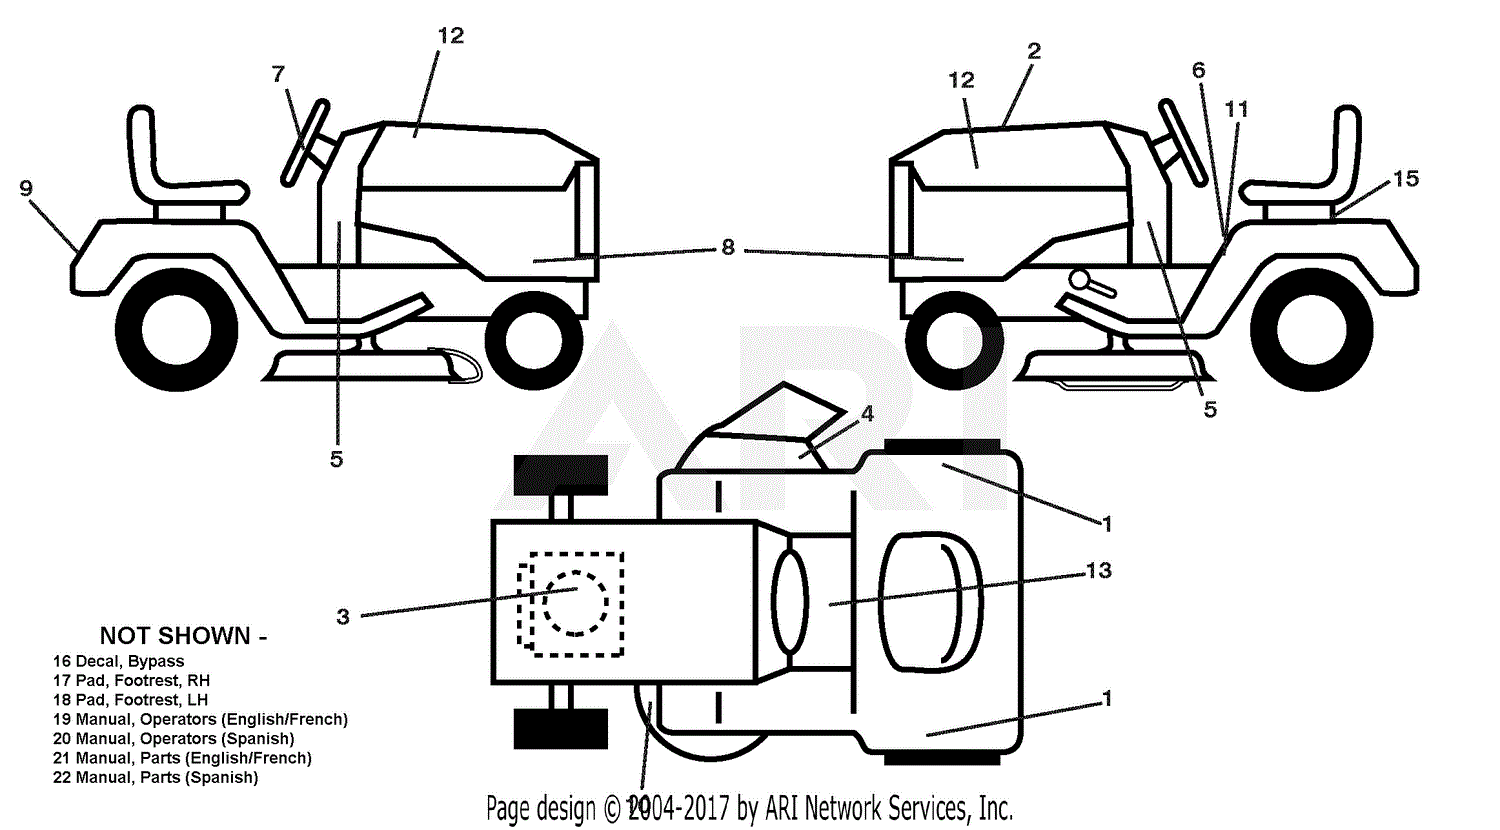 Ariens 936084 960460062 01 42 Automatic Tractor Parts Diagram